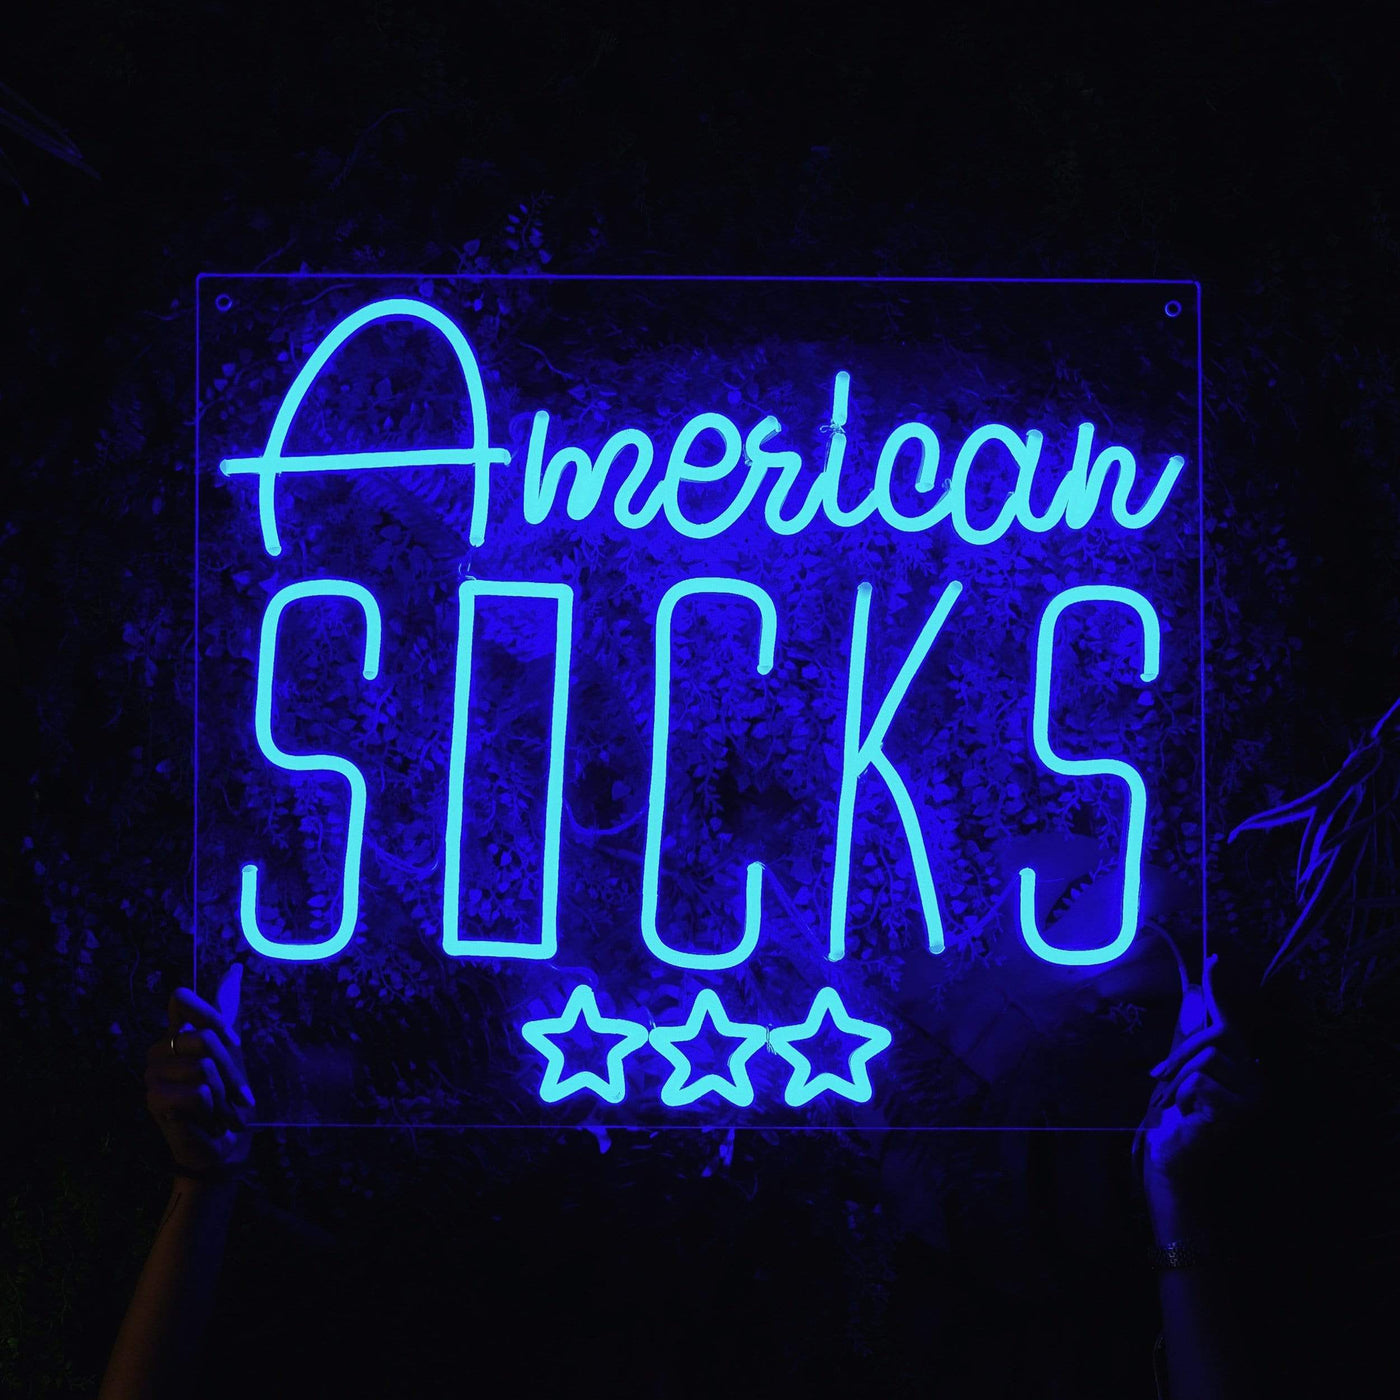 AMERICAN SOCKS Classic Logo - Neon Light